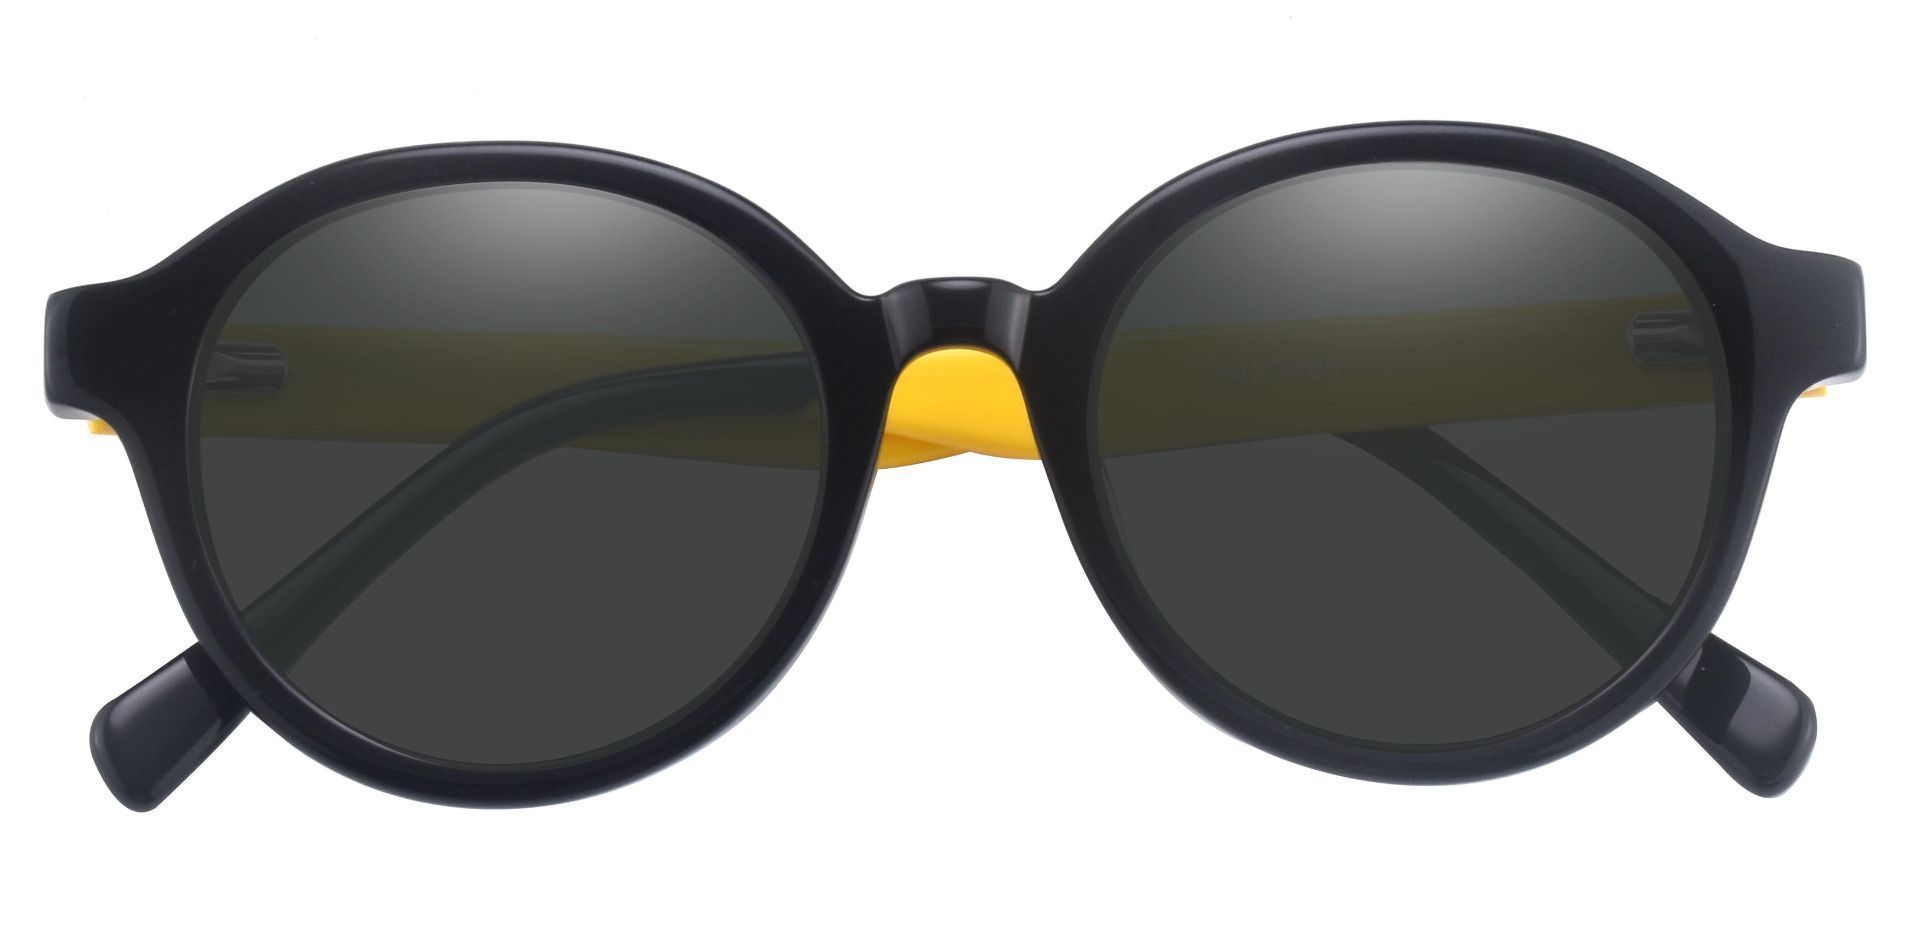 Steel City Round Prescription Sunglasses - Black Frame With Gray Lenses